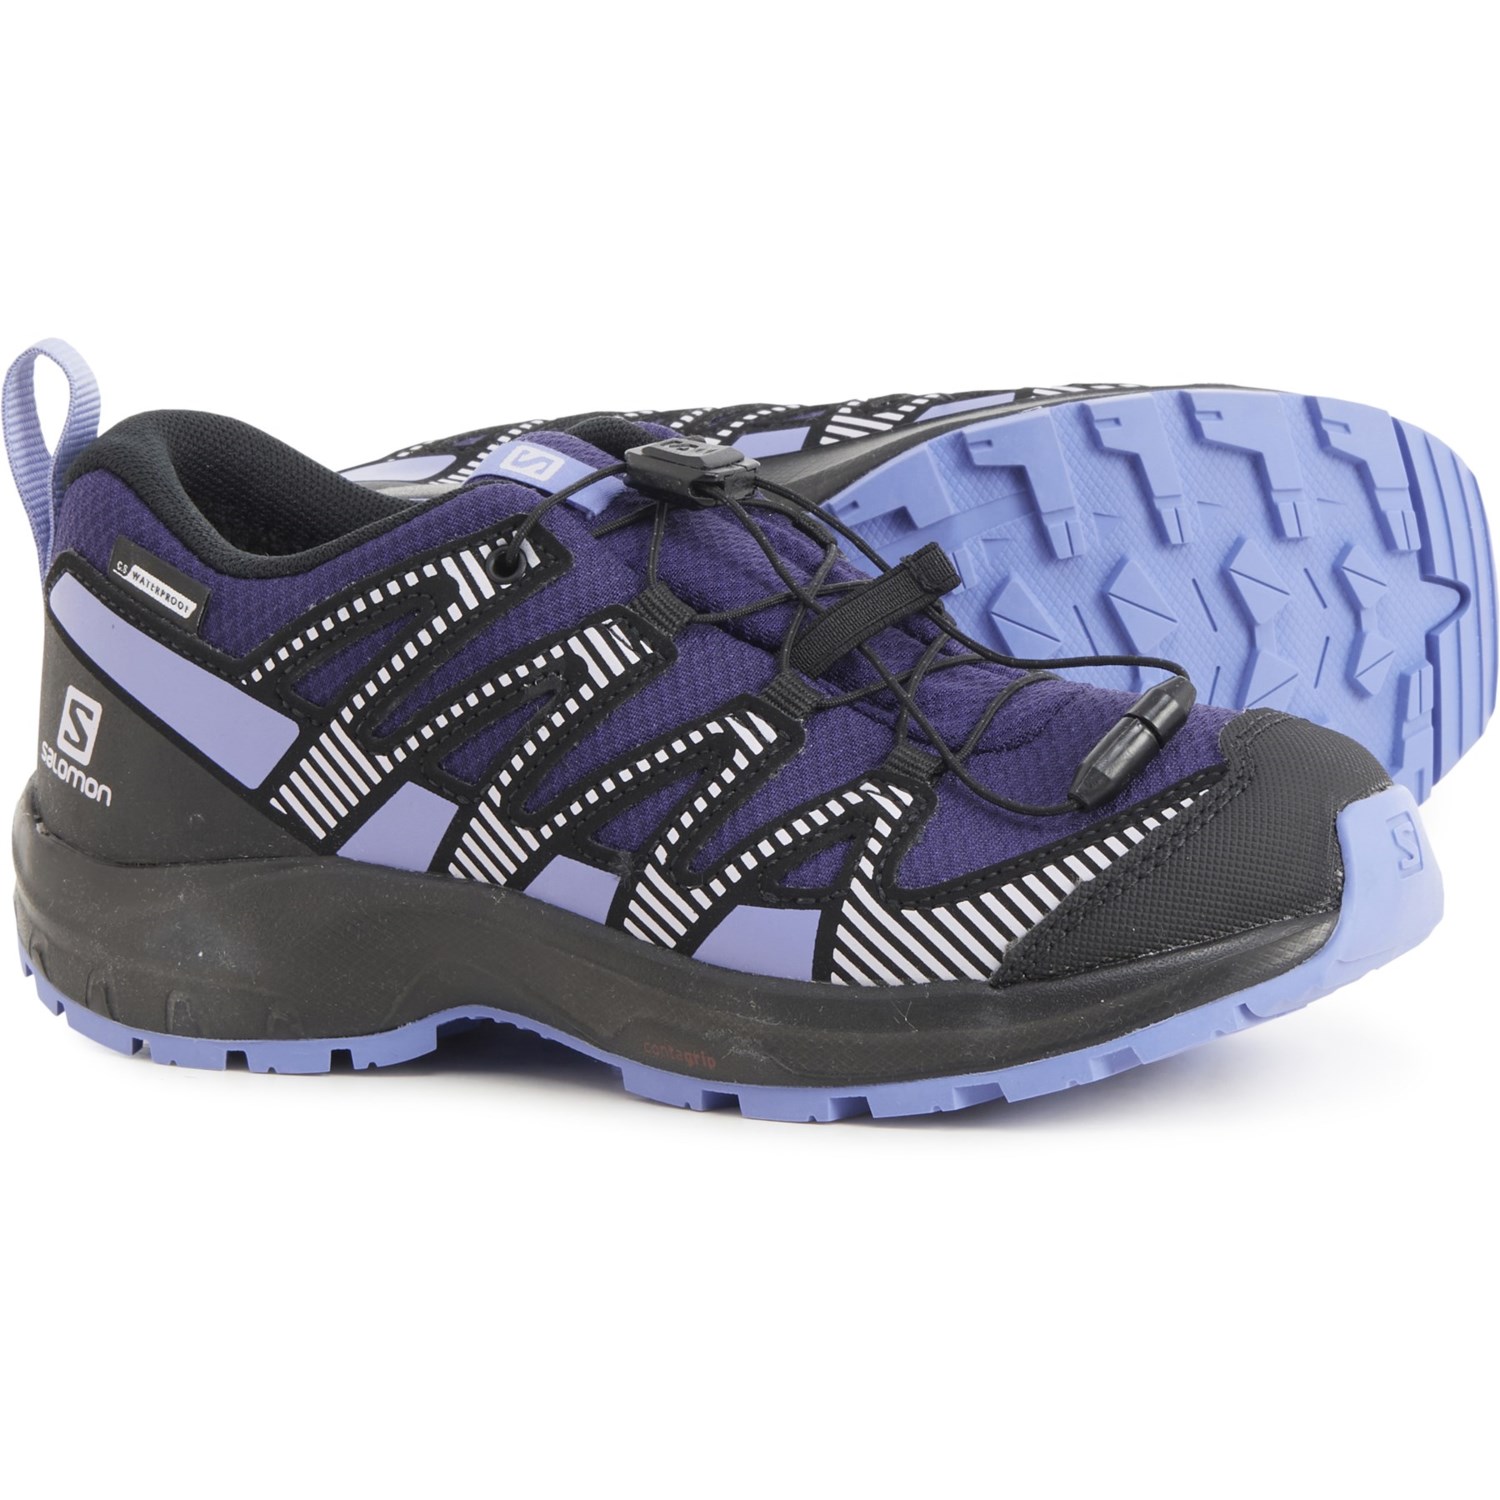 - Pro Salomon Waterproof Girls - Hiking V8 Save Shoes CSWP 50% J XA